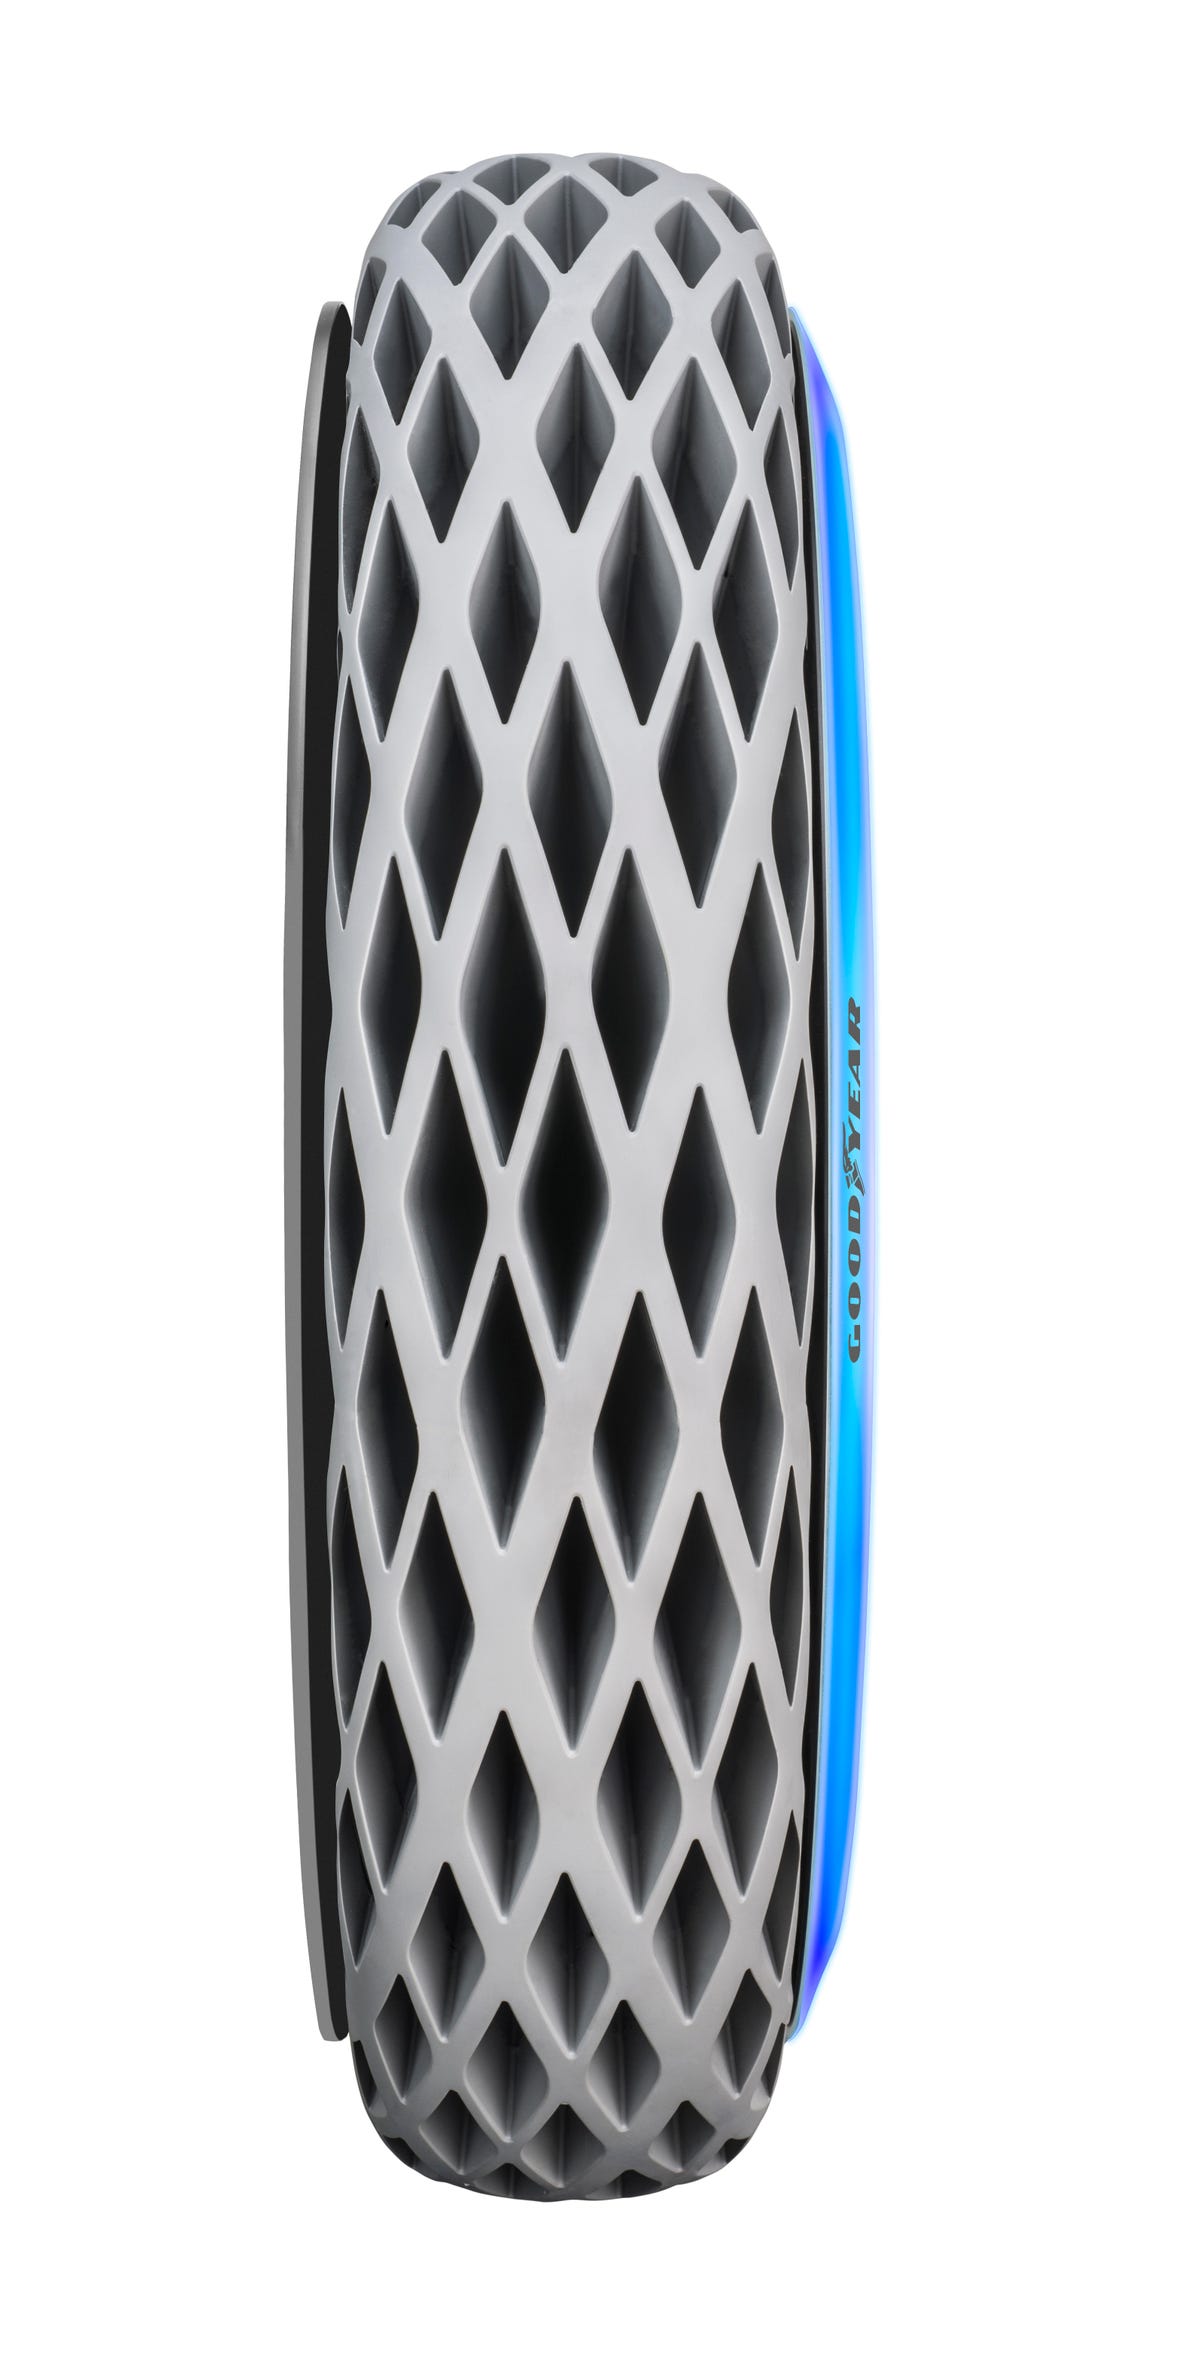 Goodyear Oxygene concept tire